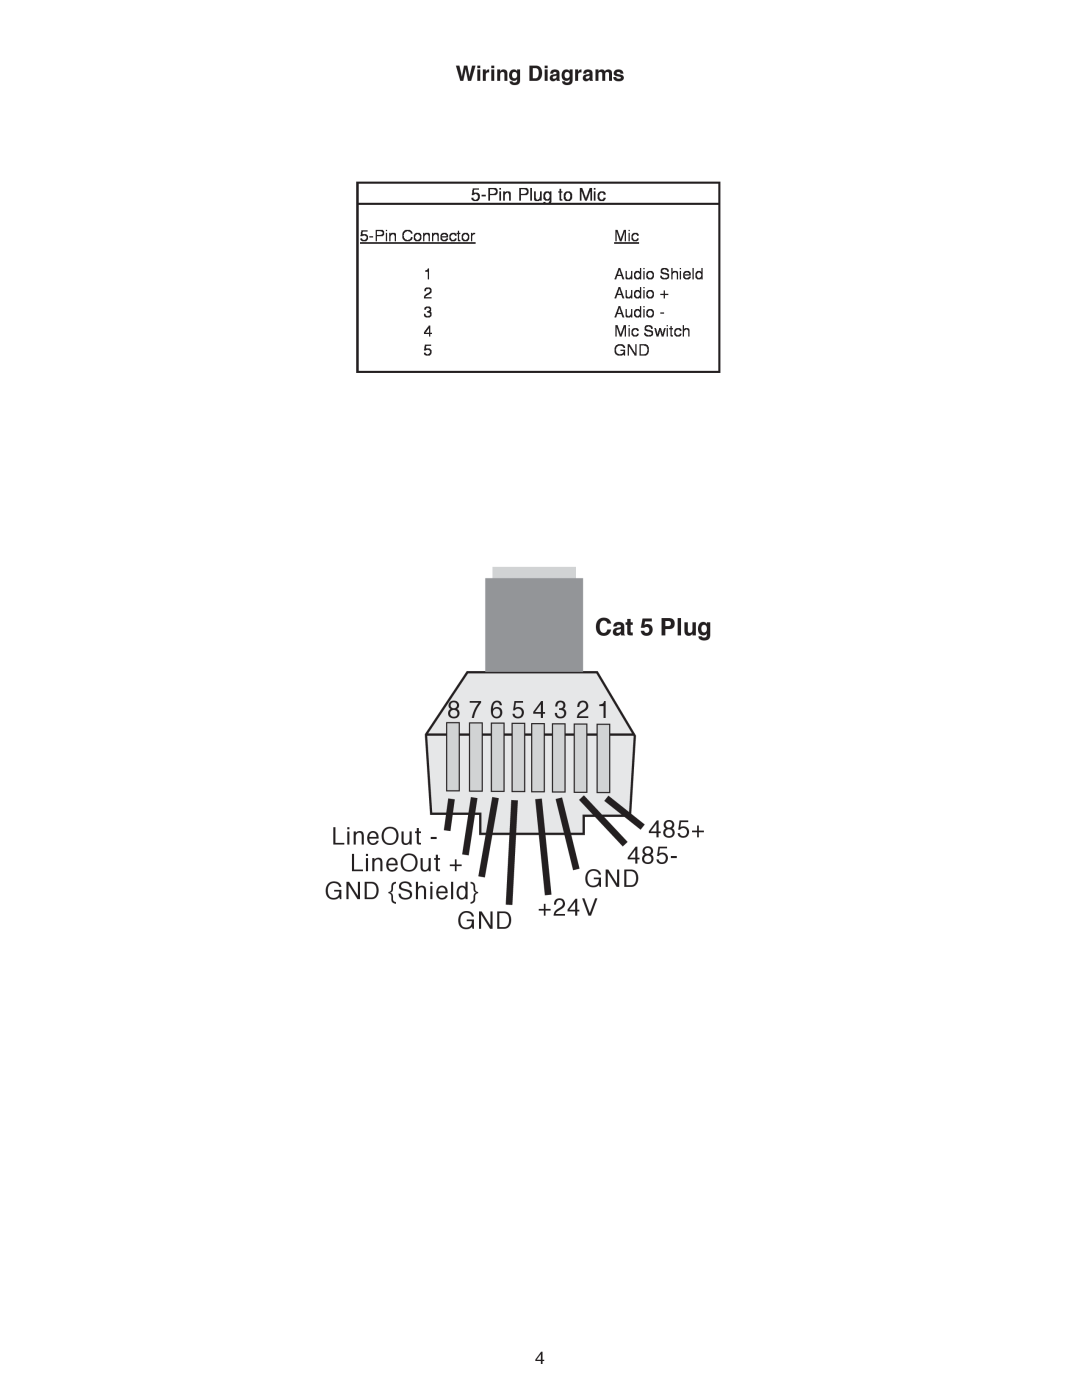 Peavey PageMatrix Wiring Diagrams, Cat 5 Plug, 8 7 6 5 4 3 2, 485+, LineOut +, GND Shield, +24V, Pin Plug to Mic 